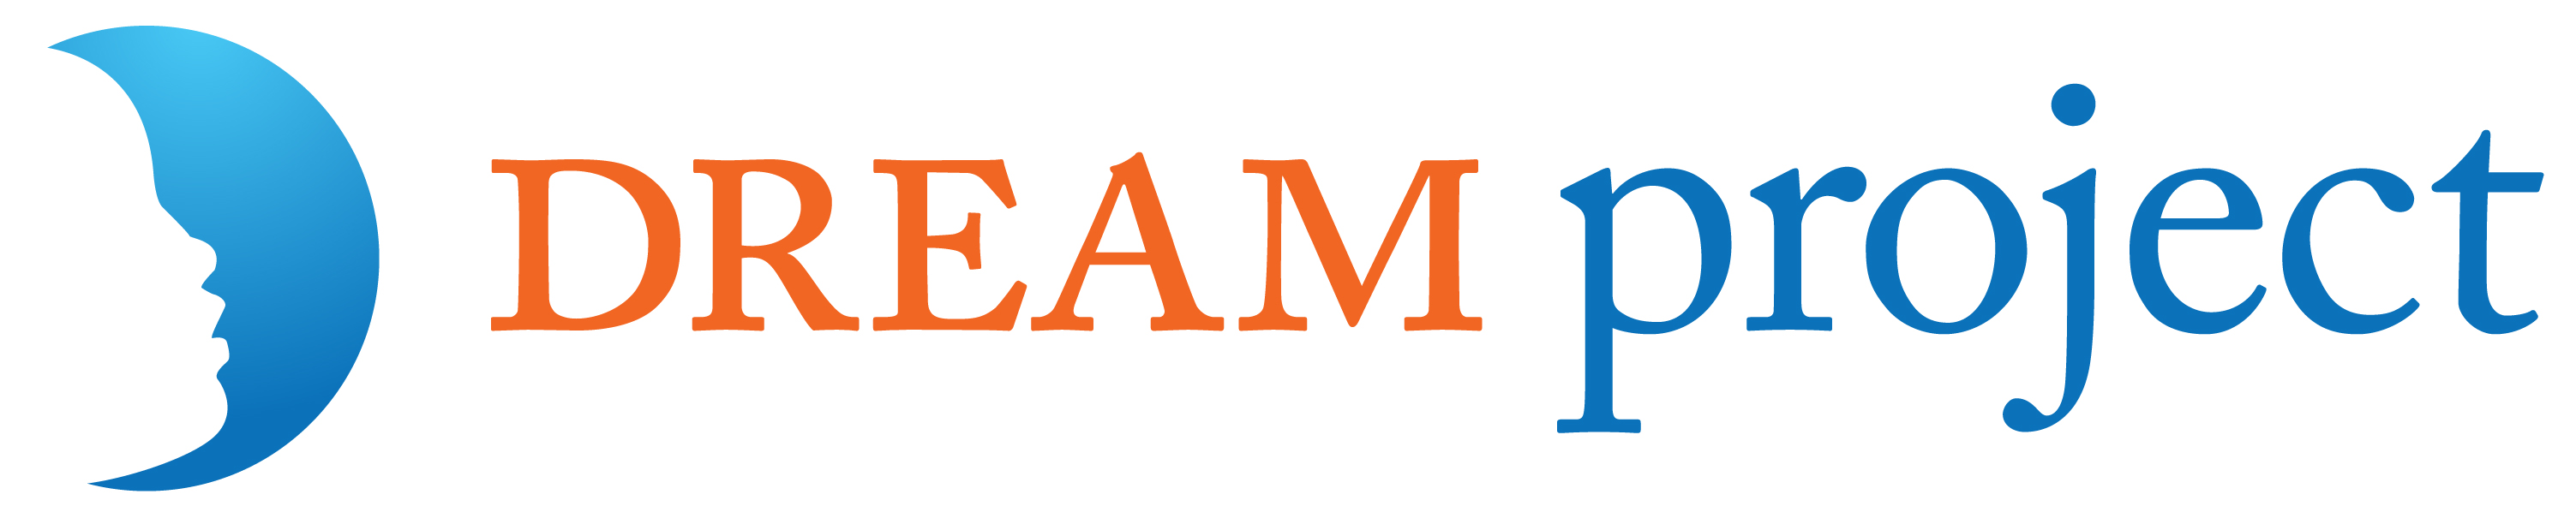 The DREAM Project logo